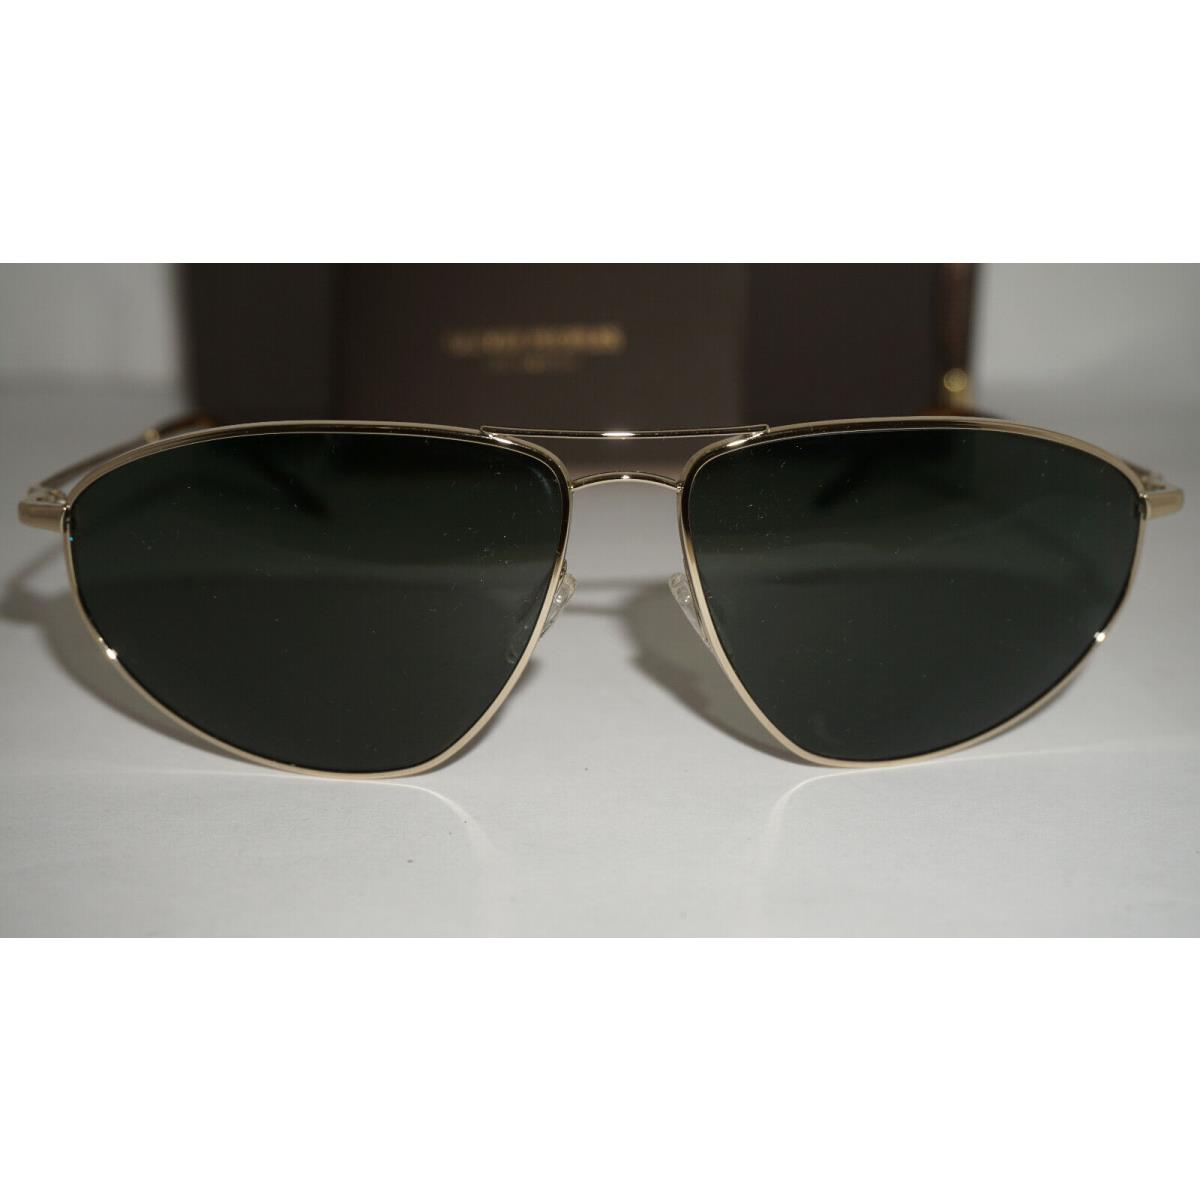 Oliver Peoples sunglasses  - Kallen Gold Frame, Green Polarized Lens 1